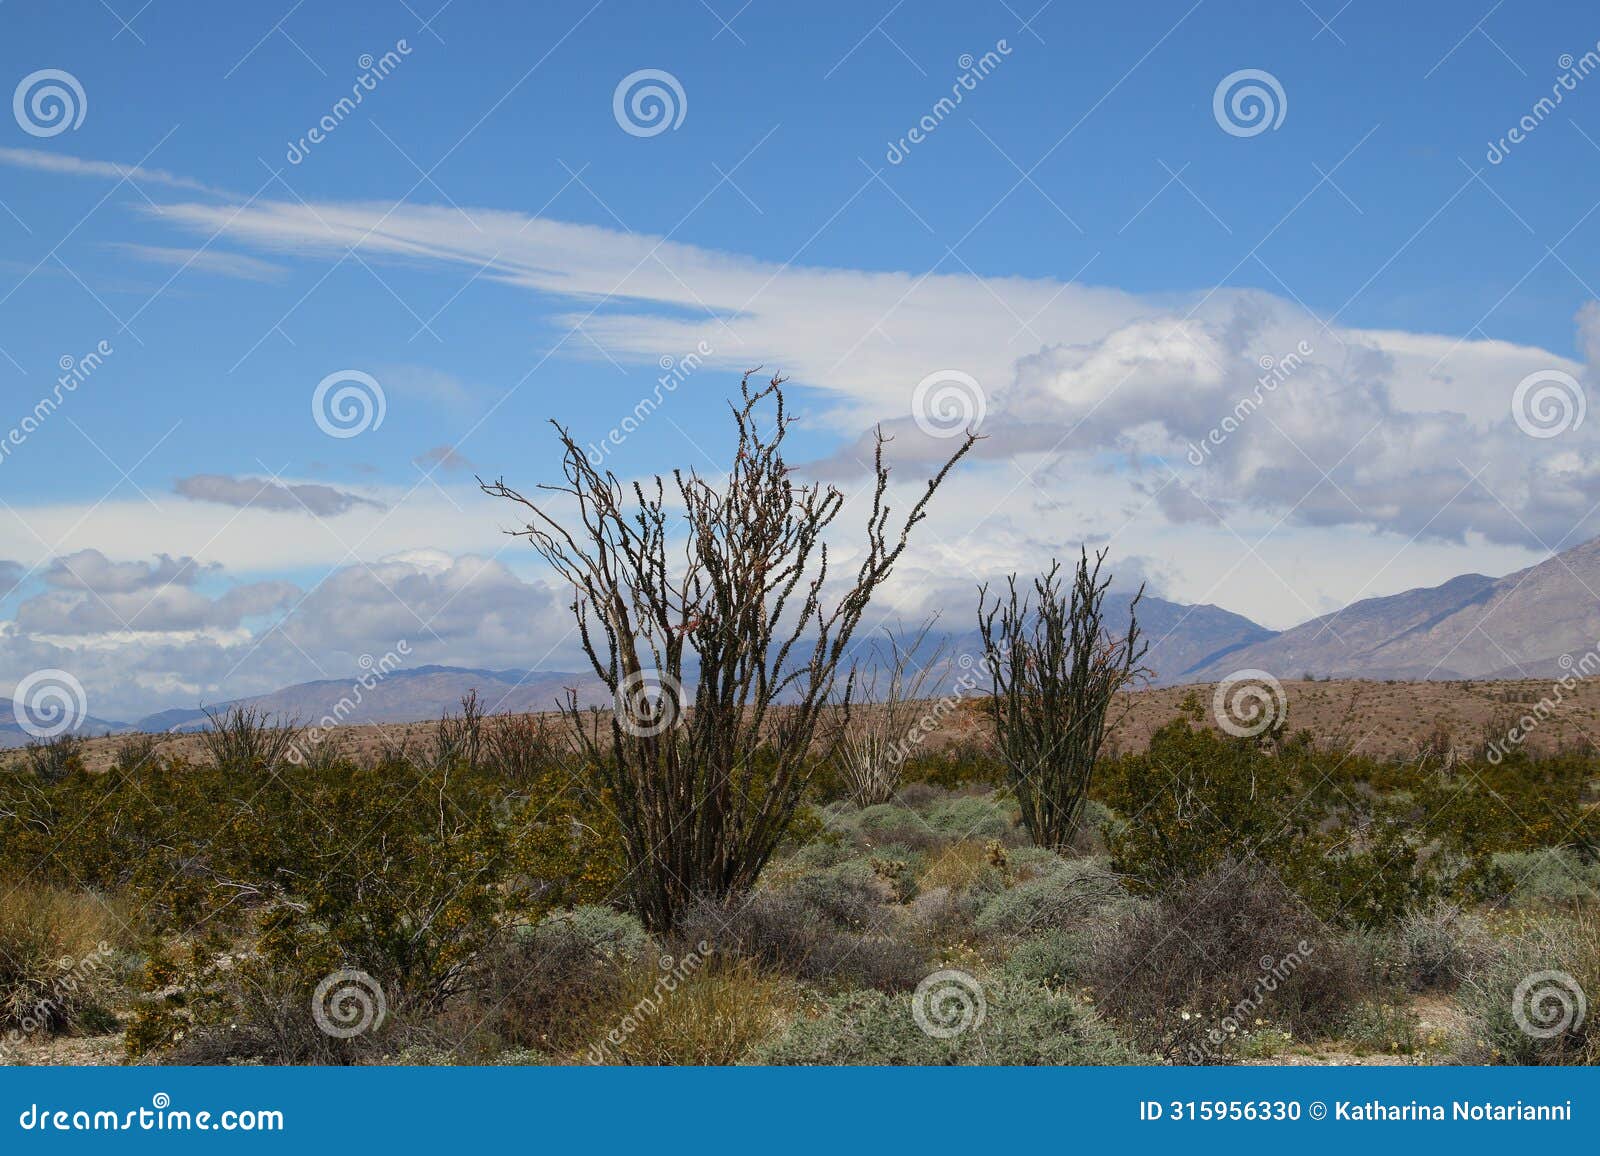 california park series - anza-borrego desert - ocotillo plant - fouquieria splendens